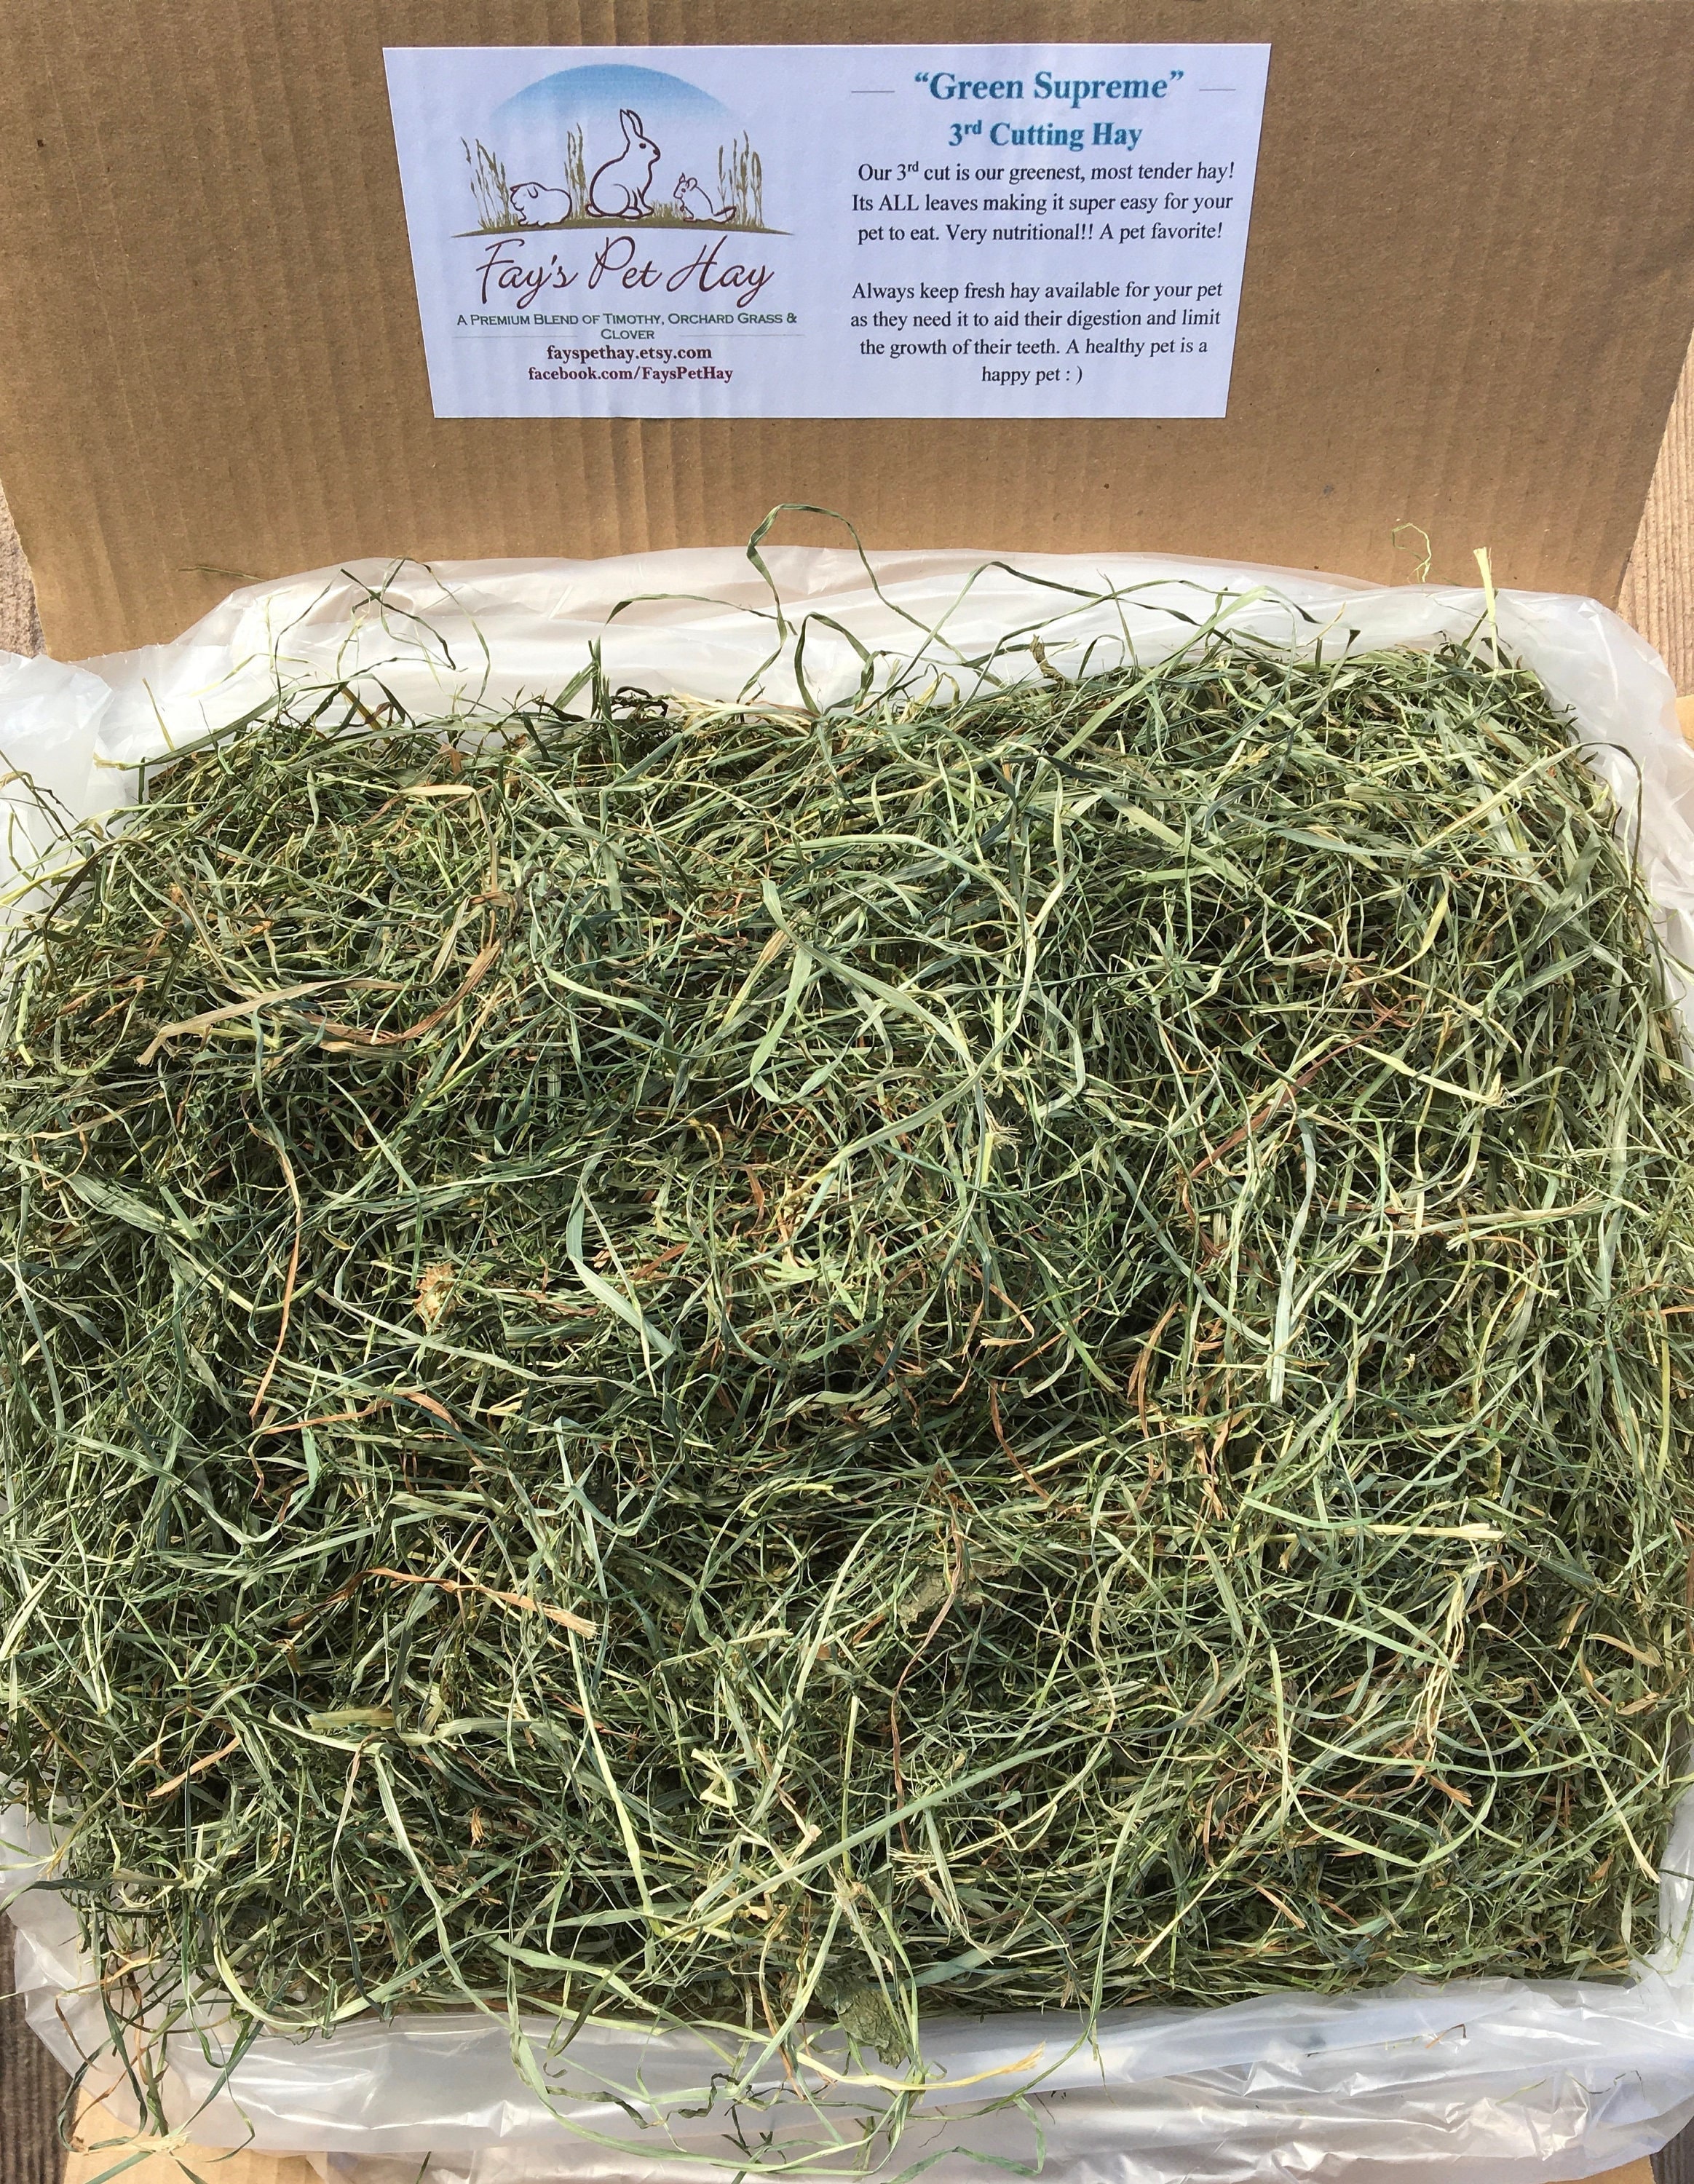 Mini Hay Bales for Fall Decorating, Tiered Tray Decor, Fall Decor 